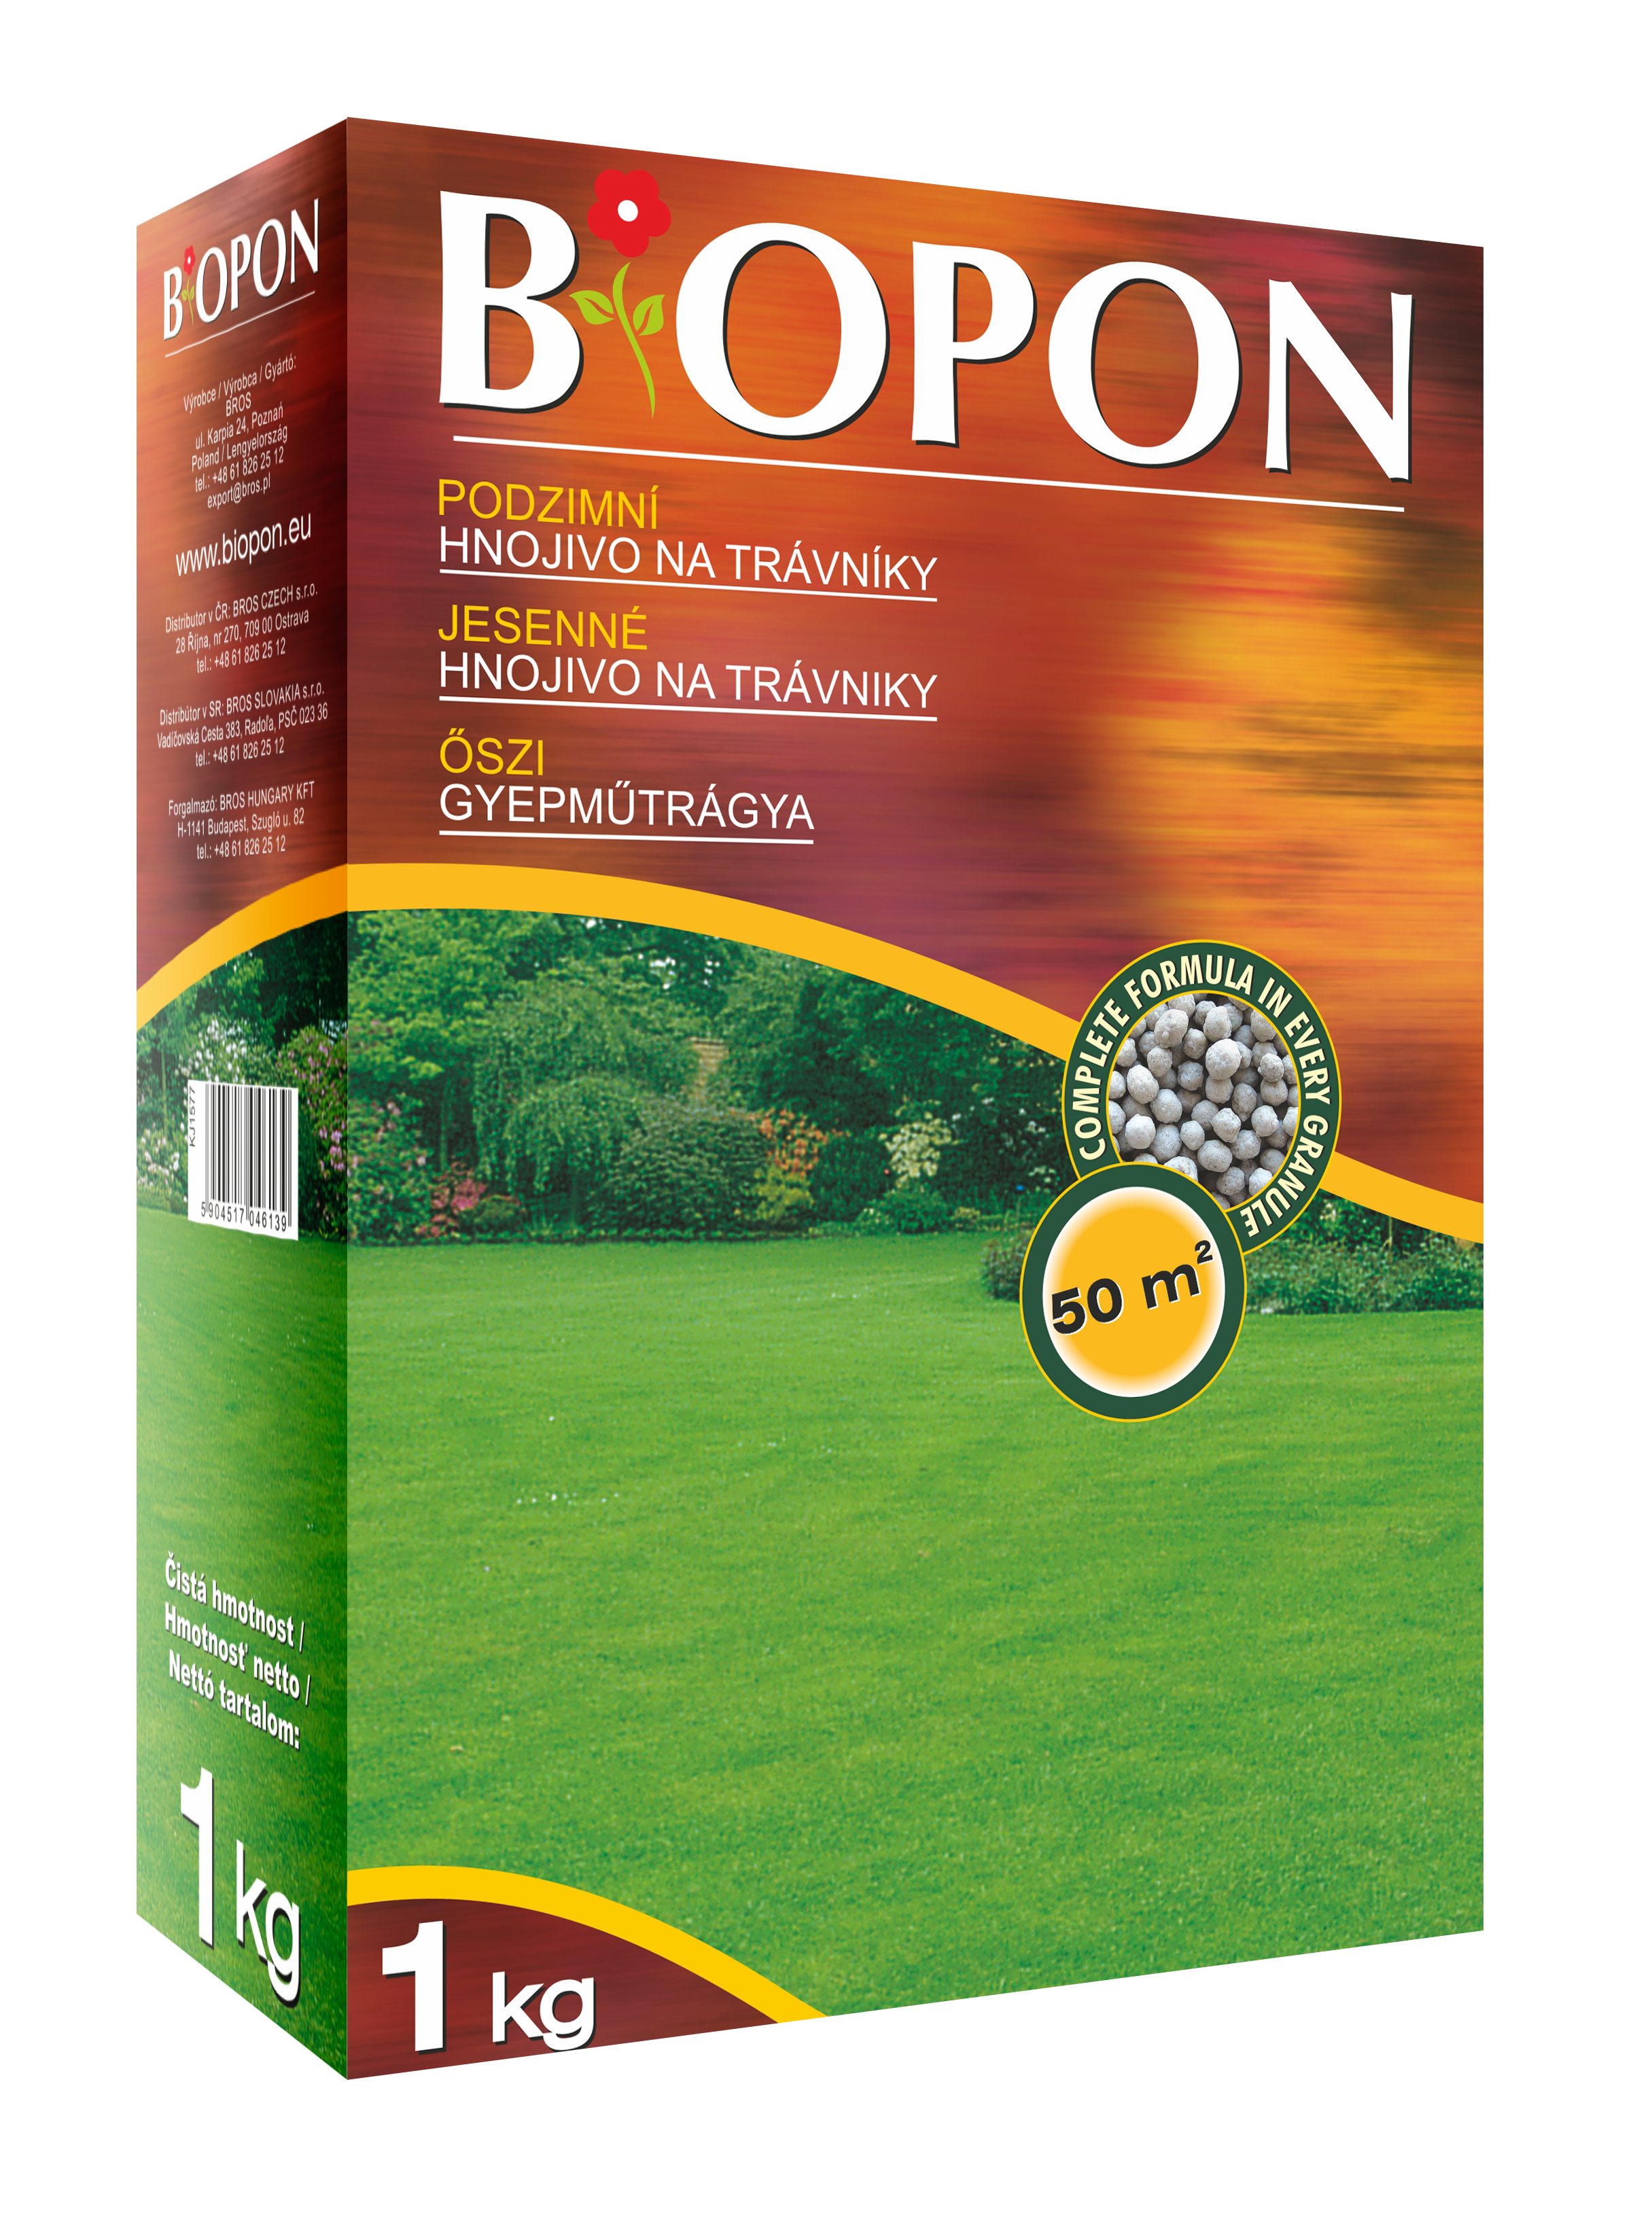 Biopon őszi gyepműtrágya 1 kg